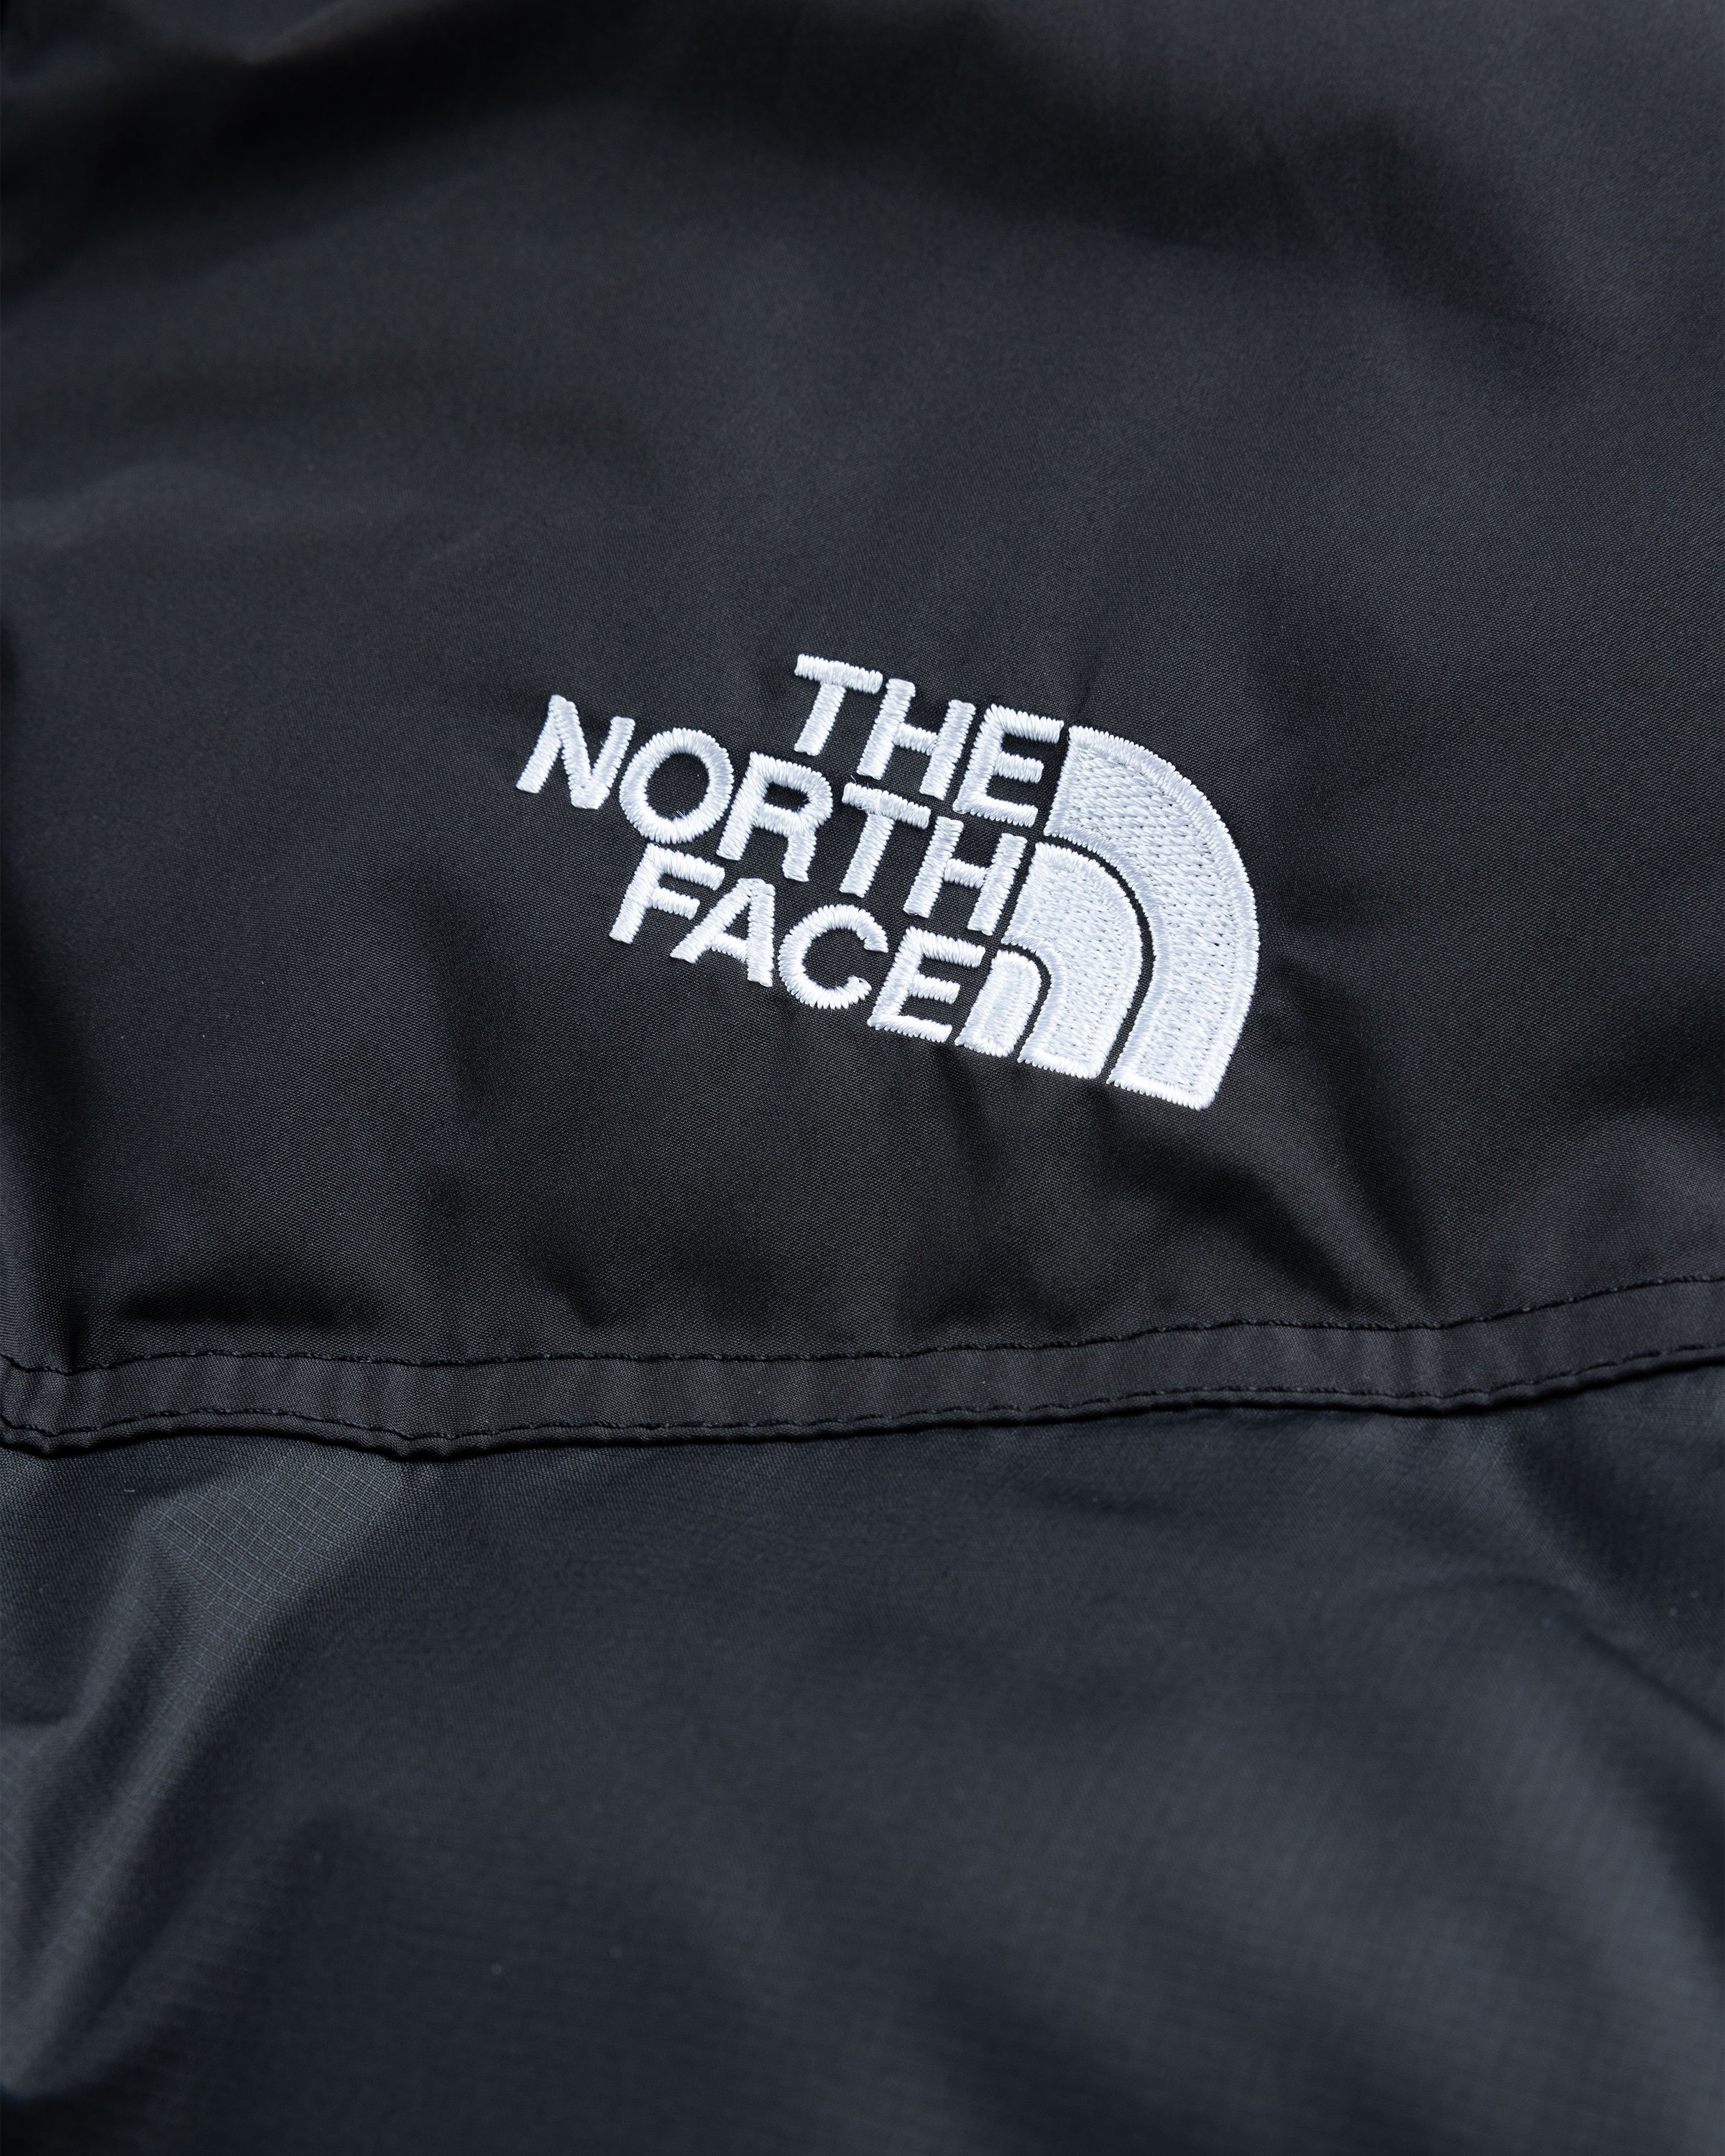 The North Face - Saikuru Jacket Black - Clothing - Black - Image 6